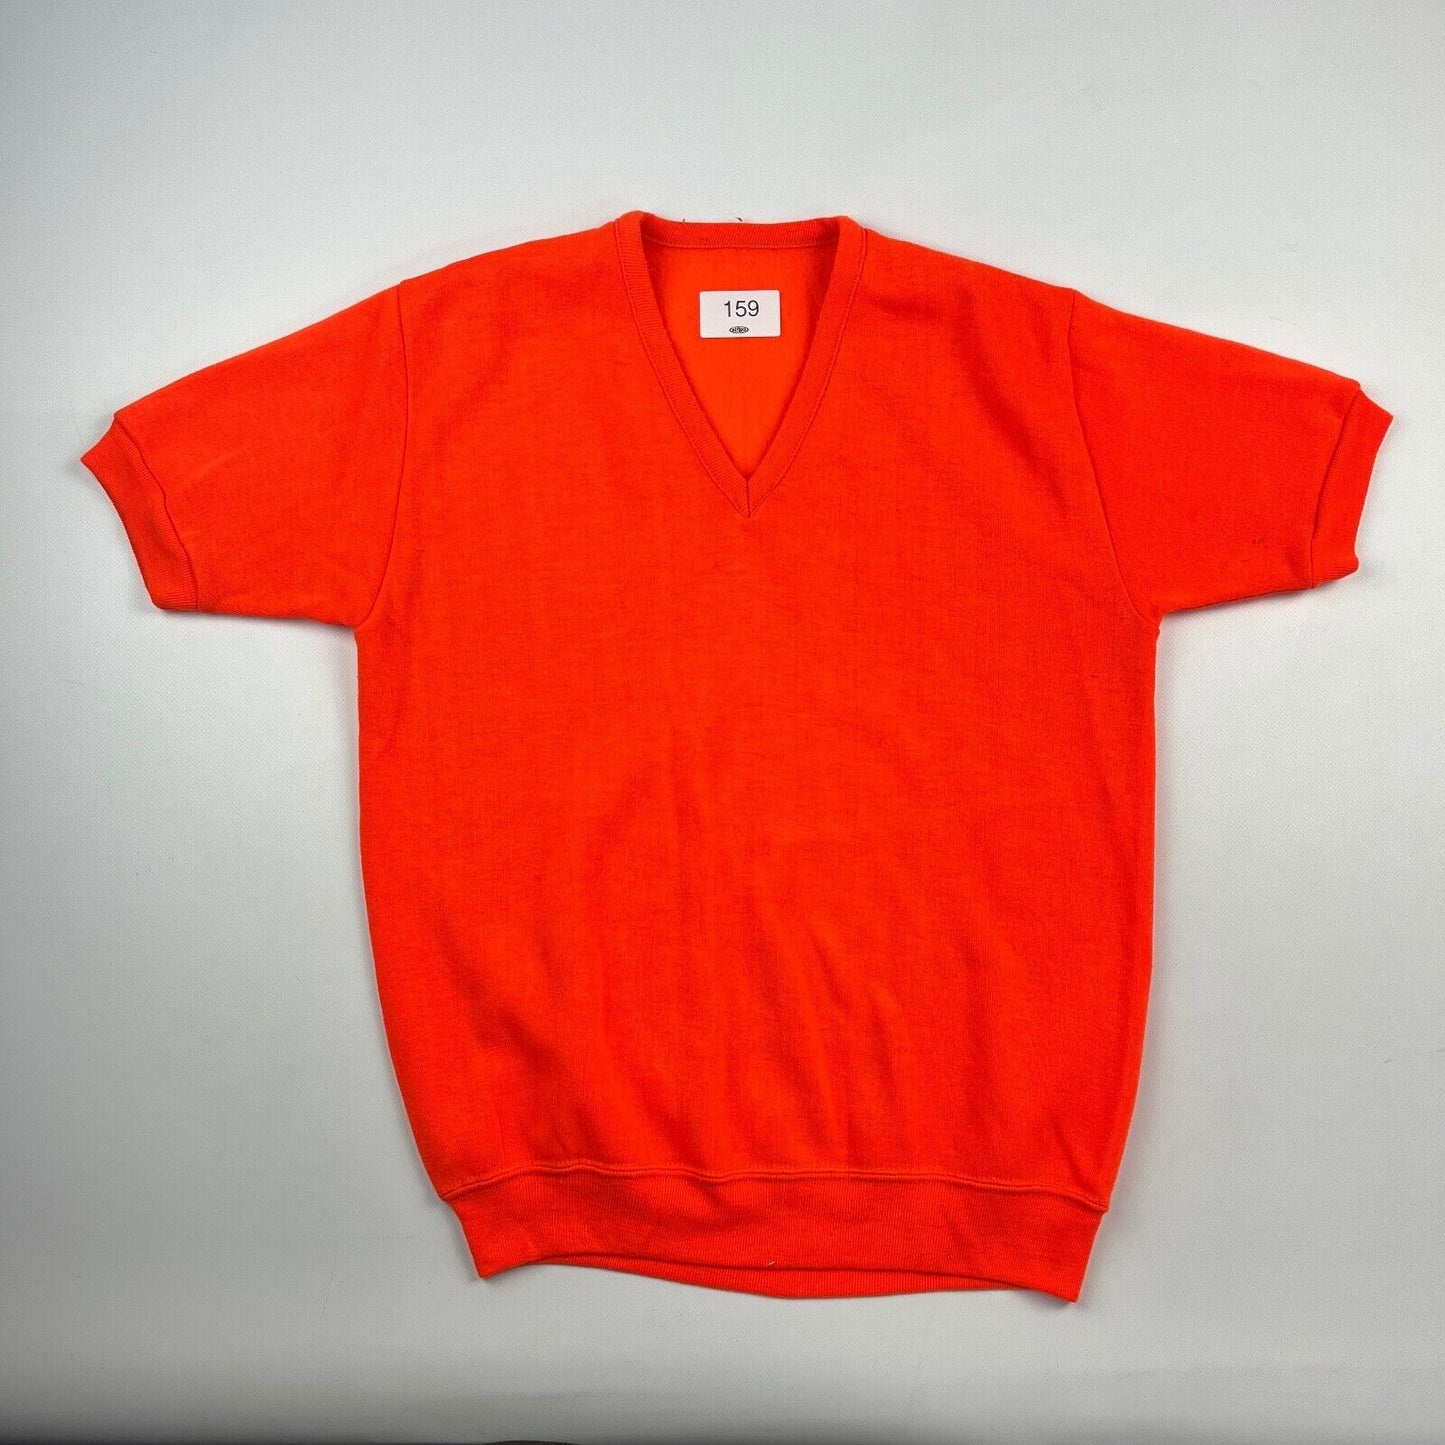 VINTAGE 90s Blank Orange Short Sleeve Crewneck Sweater sz Small Men